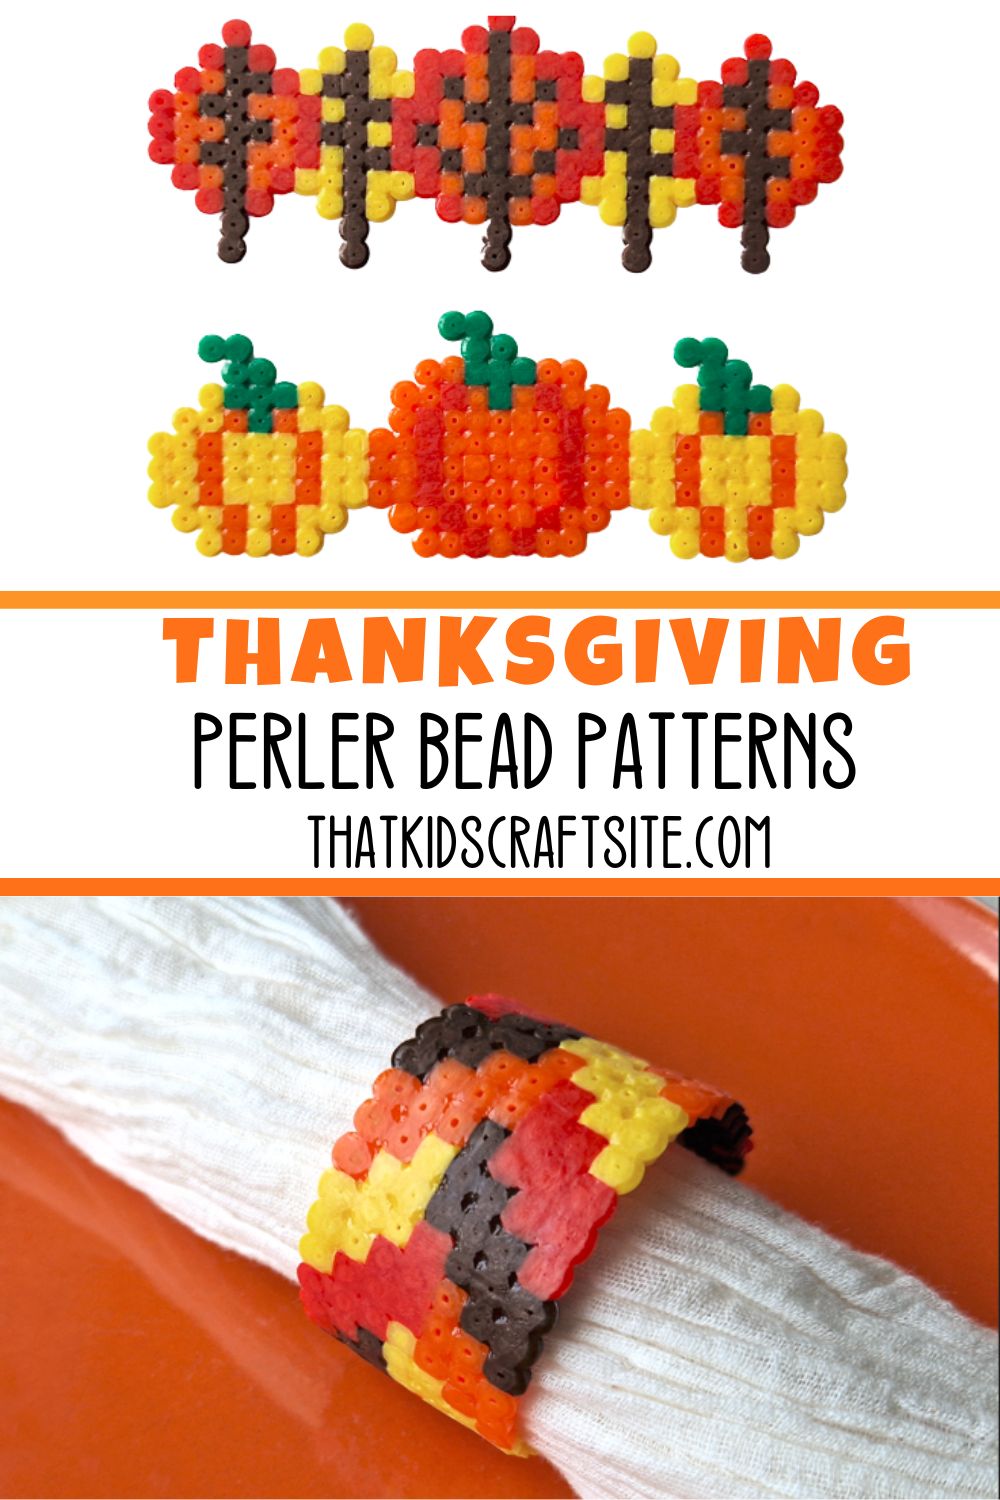 Thanksgiving Perler Bead Patterns